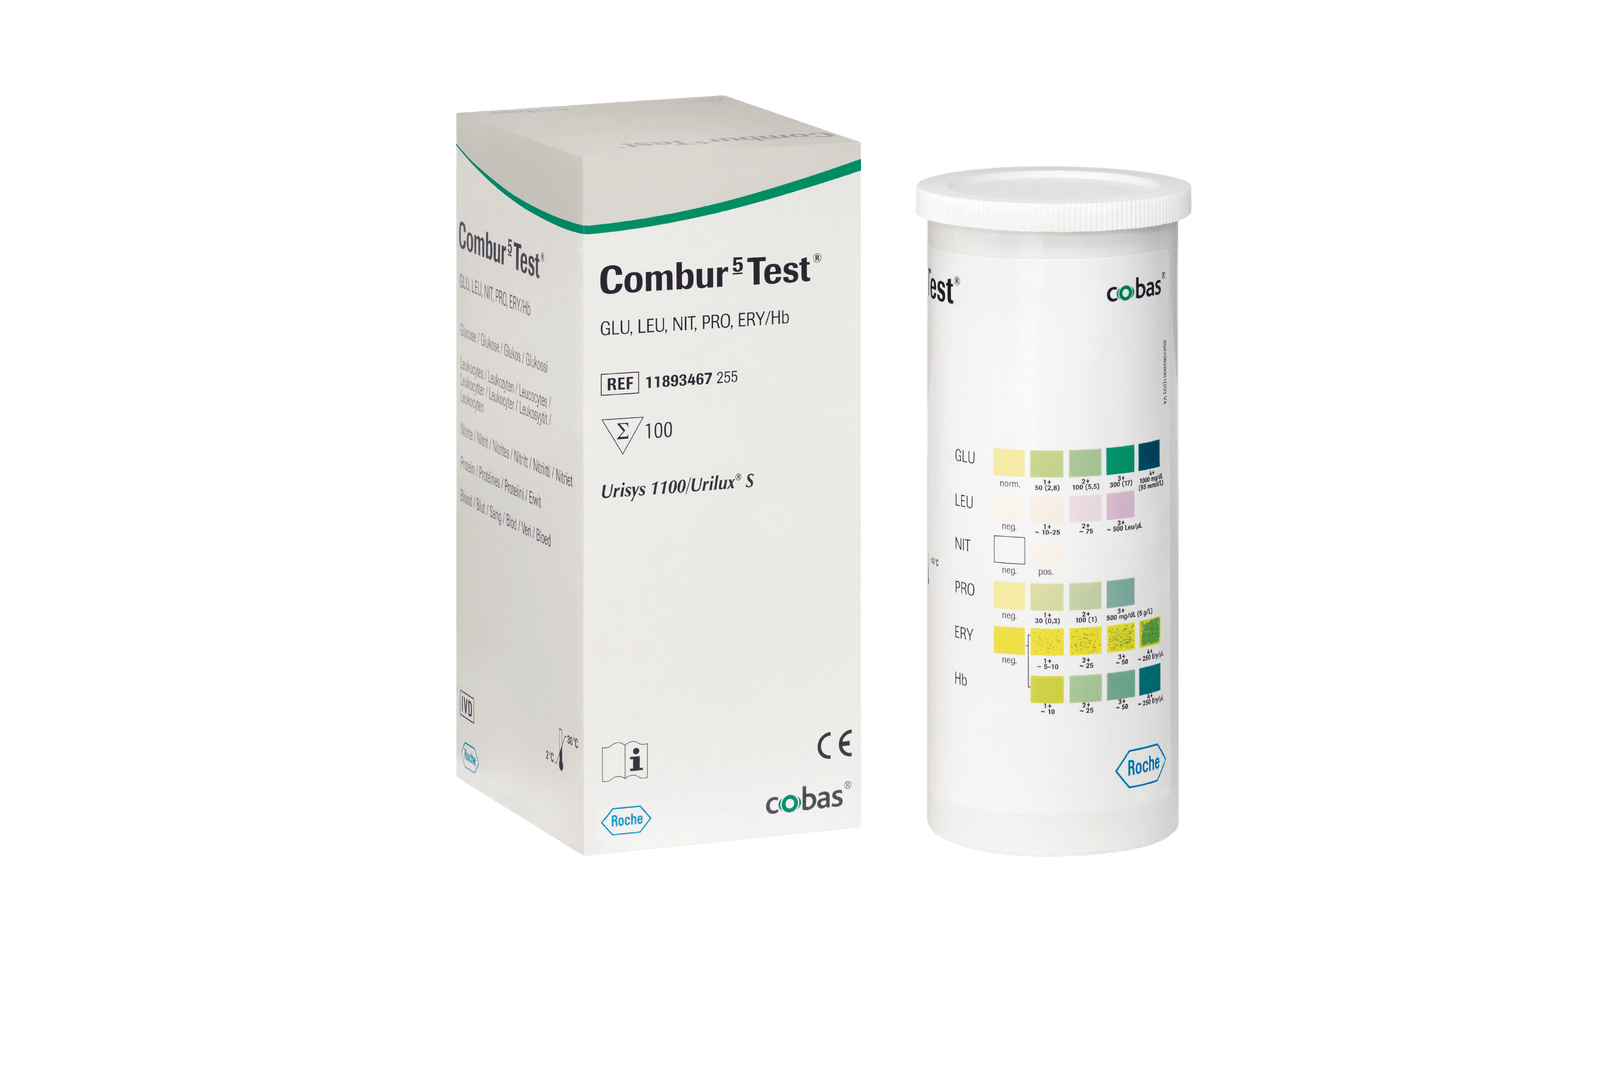 Roche Combur 5 Test Urine Strips Una Health